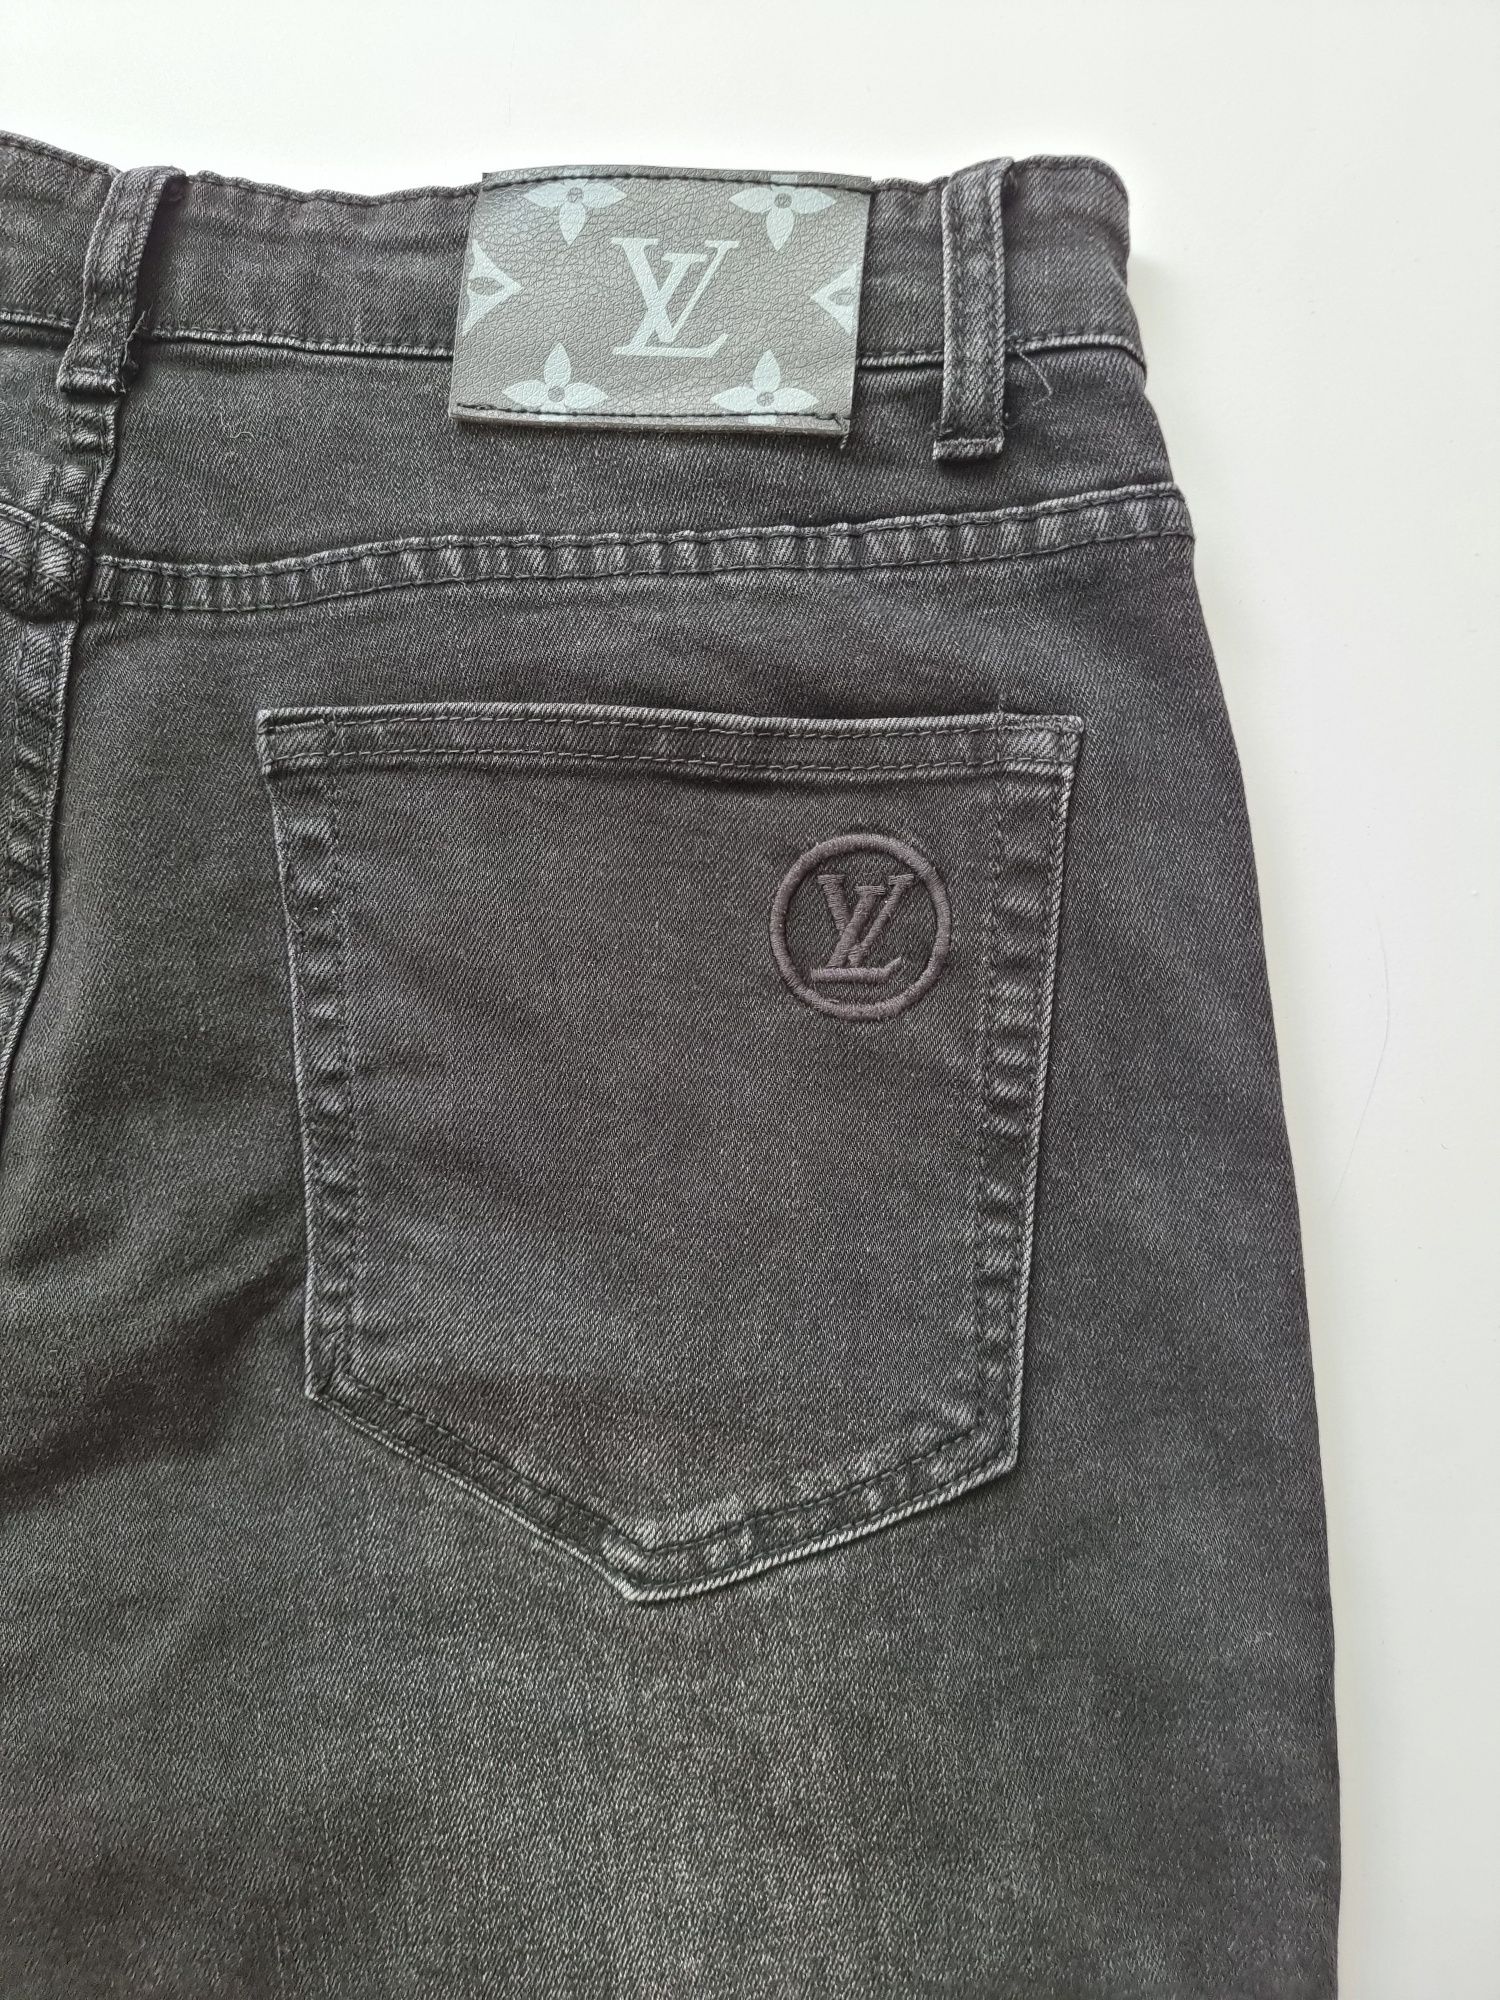 Louis Vuitton джинси 34р 50-52р